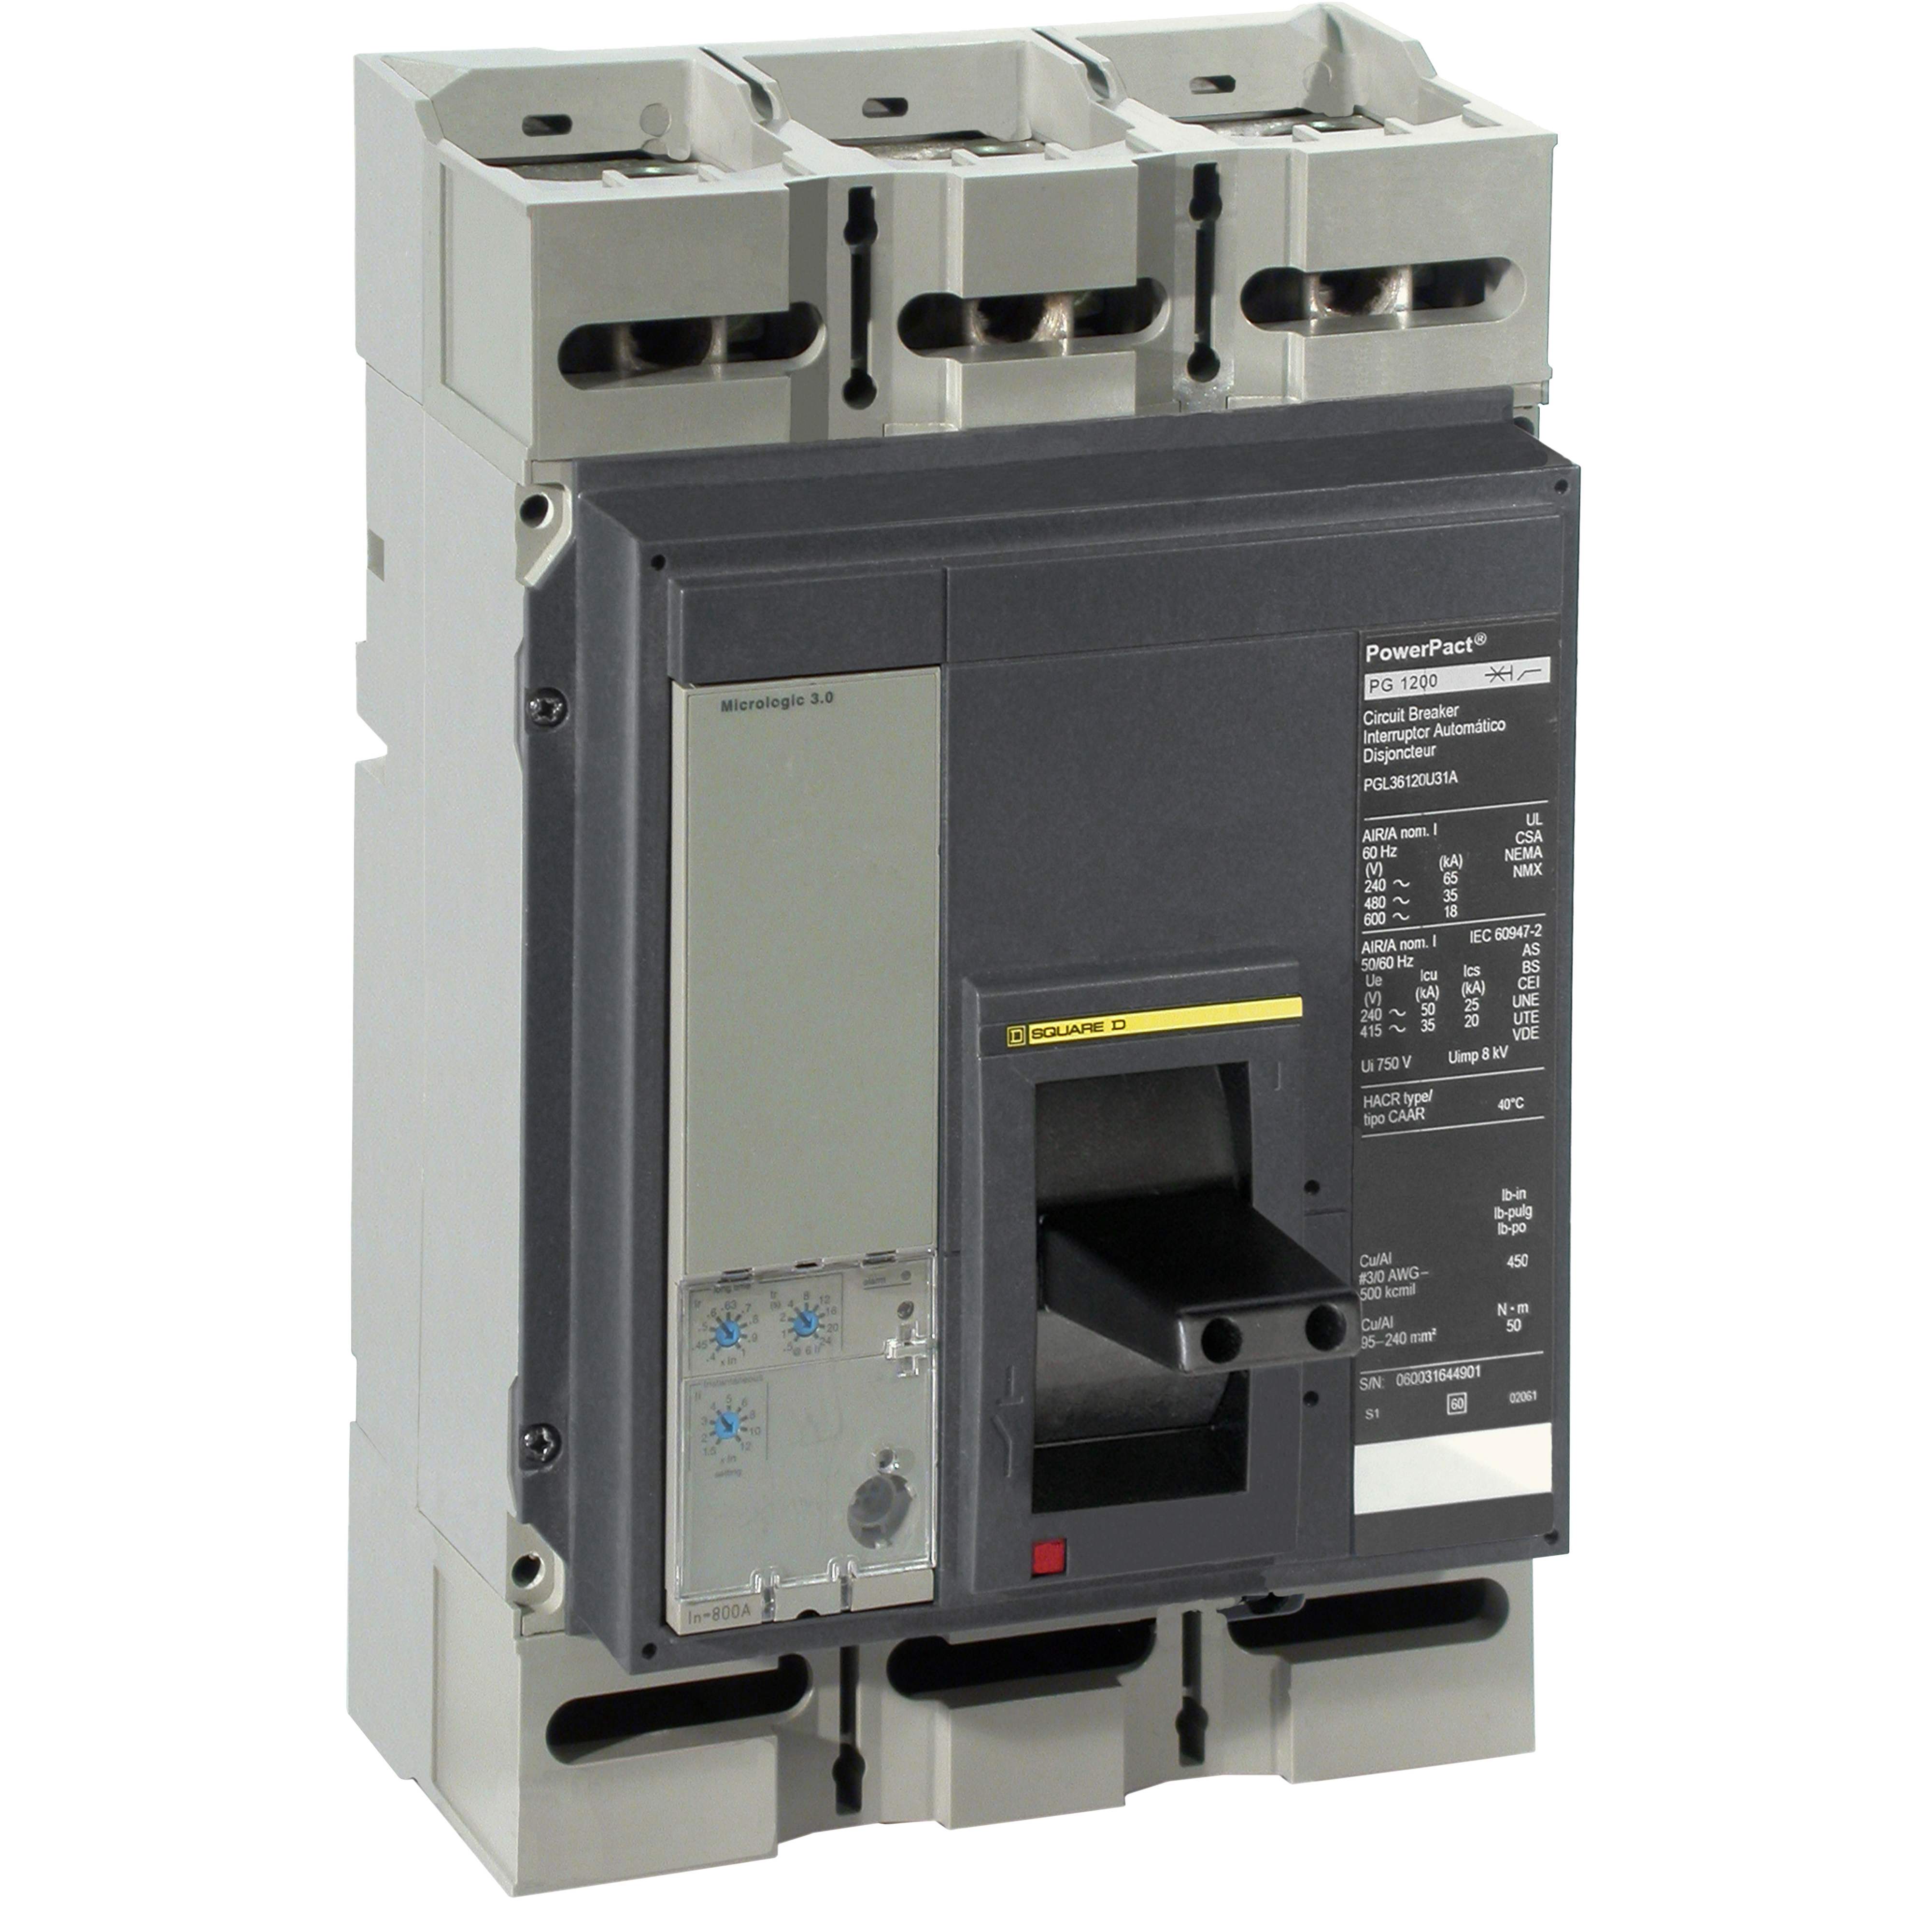 Circuit breaker, PowerPacT P, 800A, 3 pole, 480VAC, 100kA, lugs, Micrologic 3.0, 100%